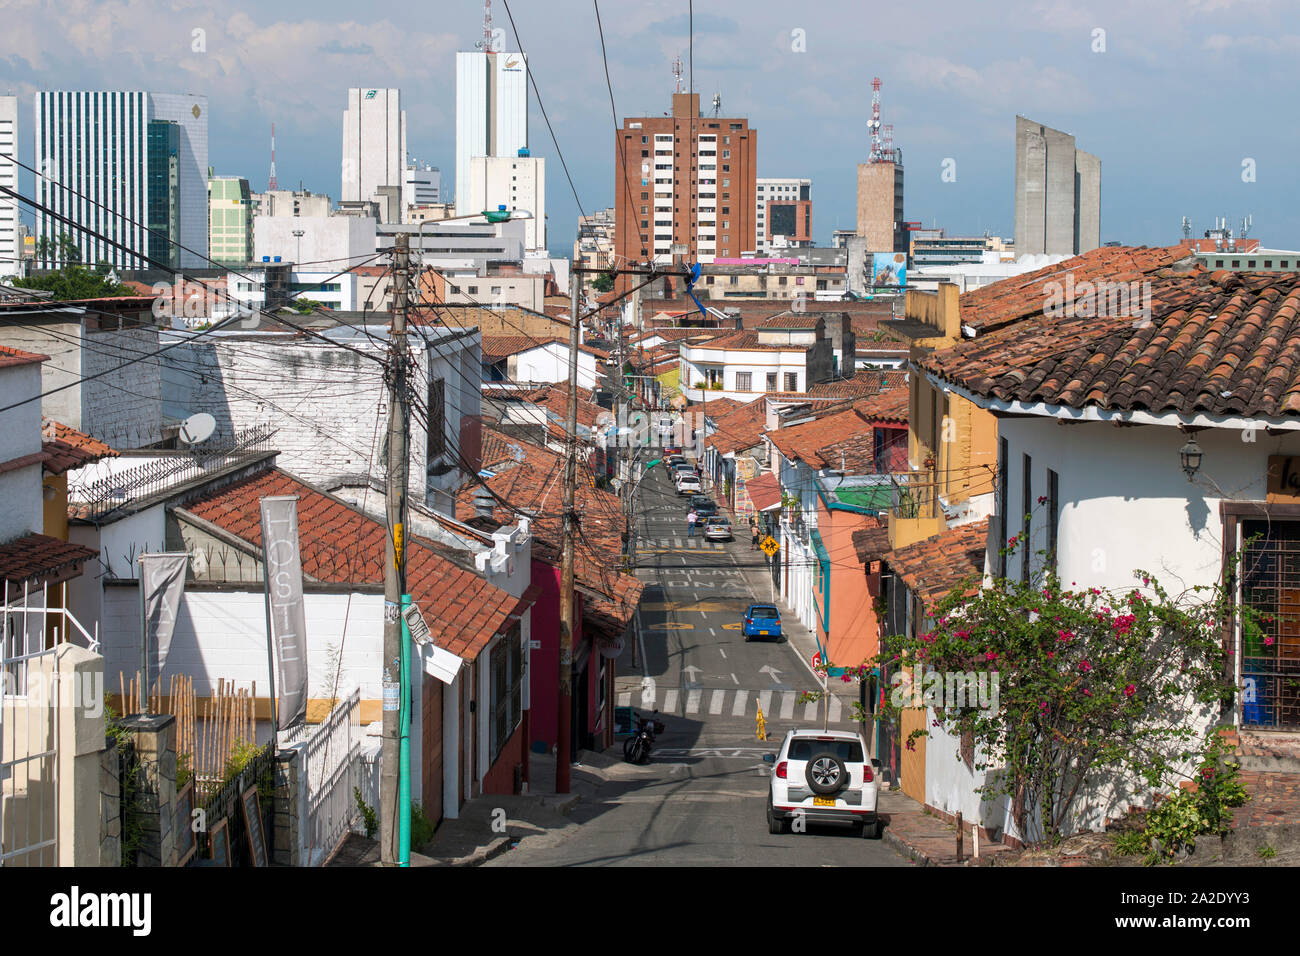 https://c8.alamy.com/comp/2A2DYY3/the-barrio-neighbourhood-of-san-antonio-in-the-city-of-cali-colombia-2A2DYY3.jpg